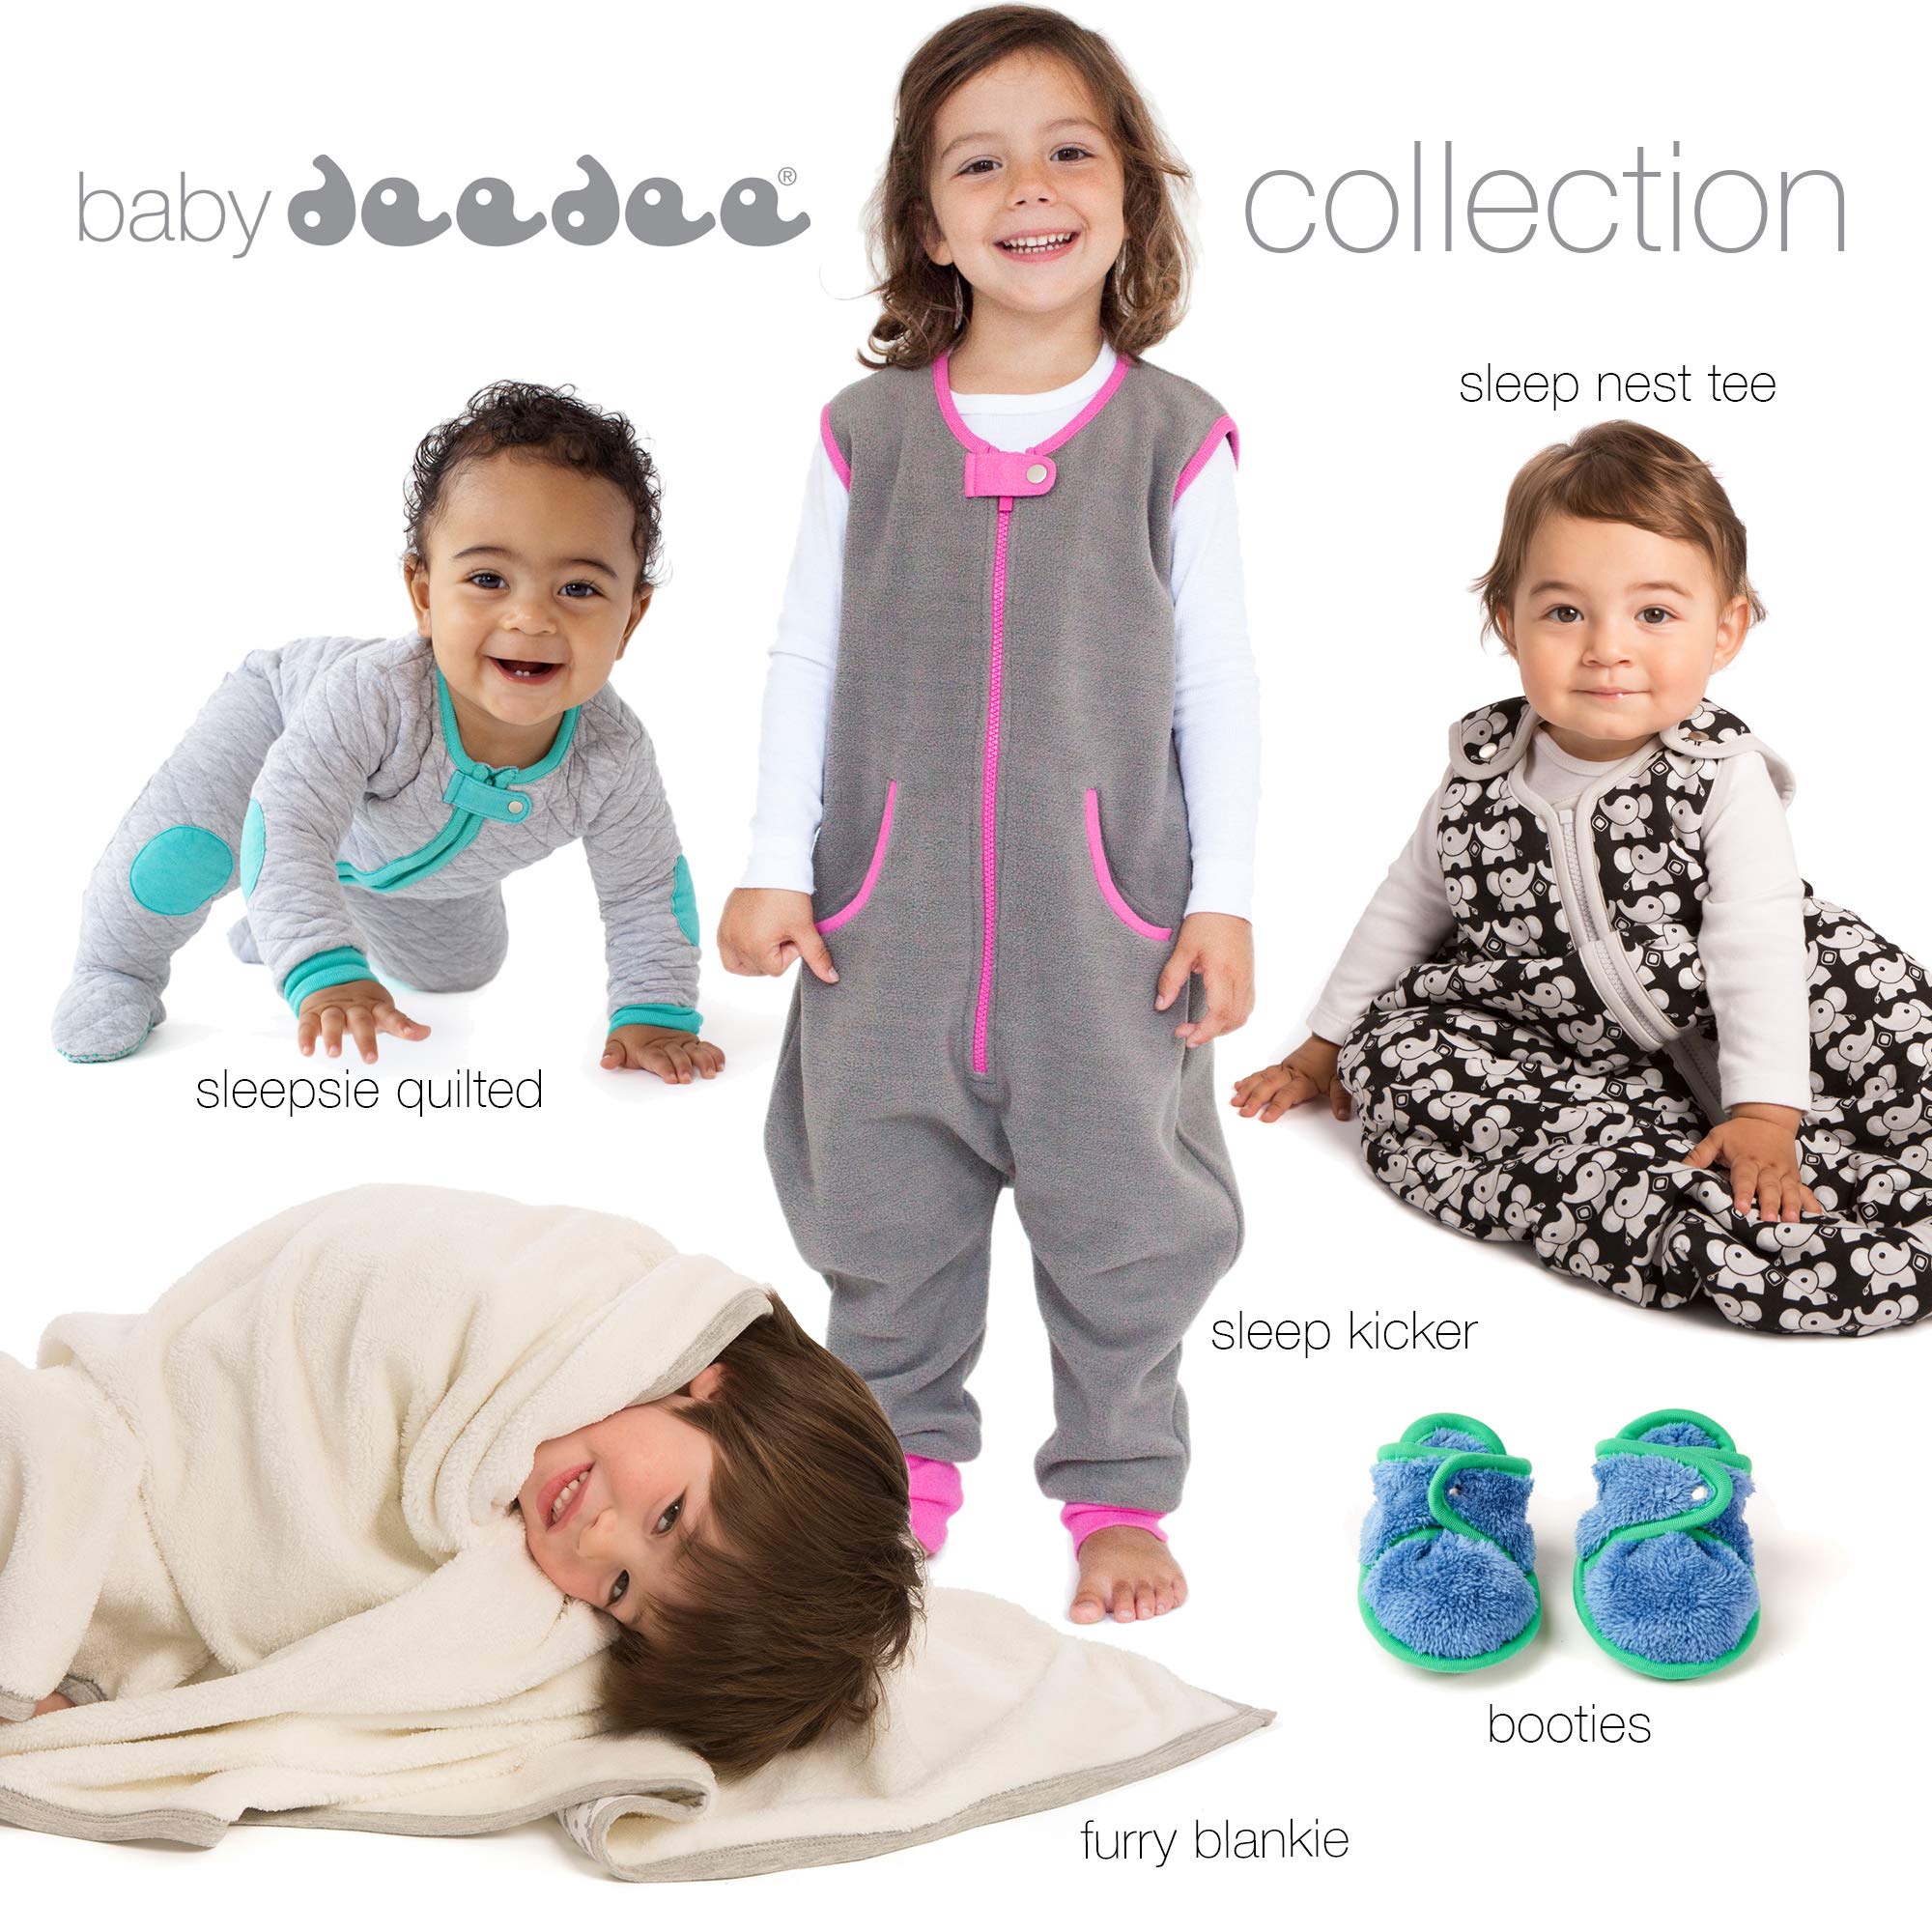 Baby Deedee Sleep Nest Sleeping Sack, Warm Baby Sleeping Bag fits Toddler and Infants, Large (18-36 Months)